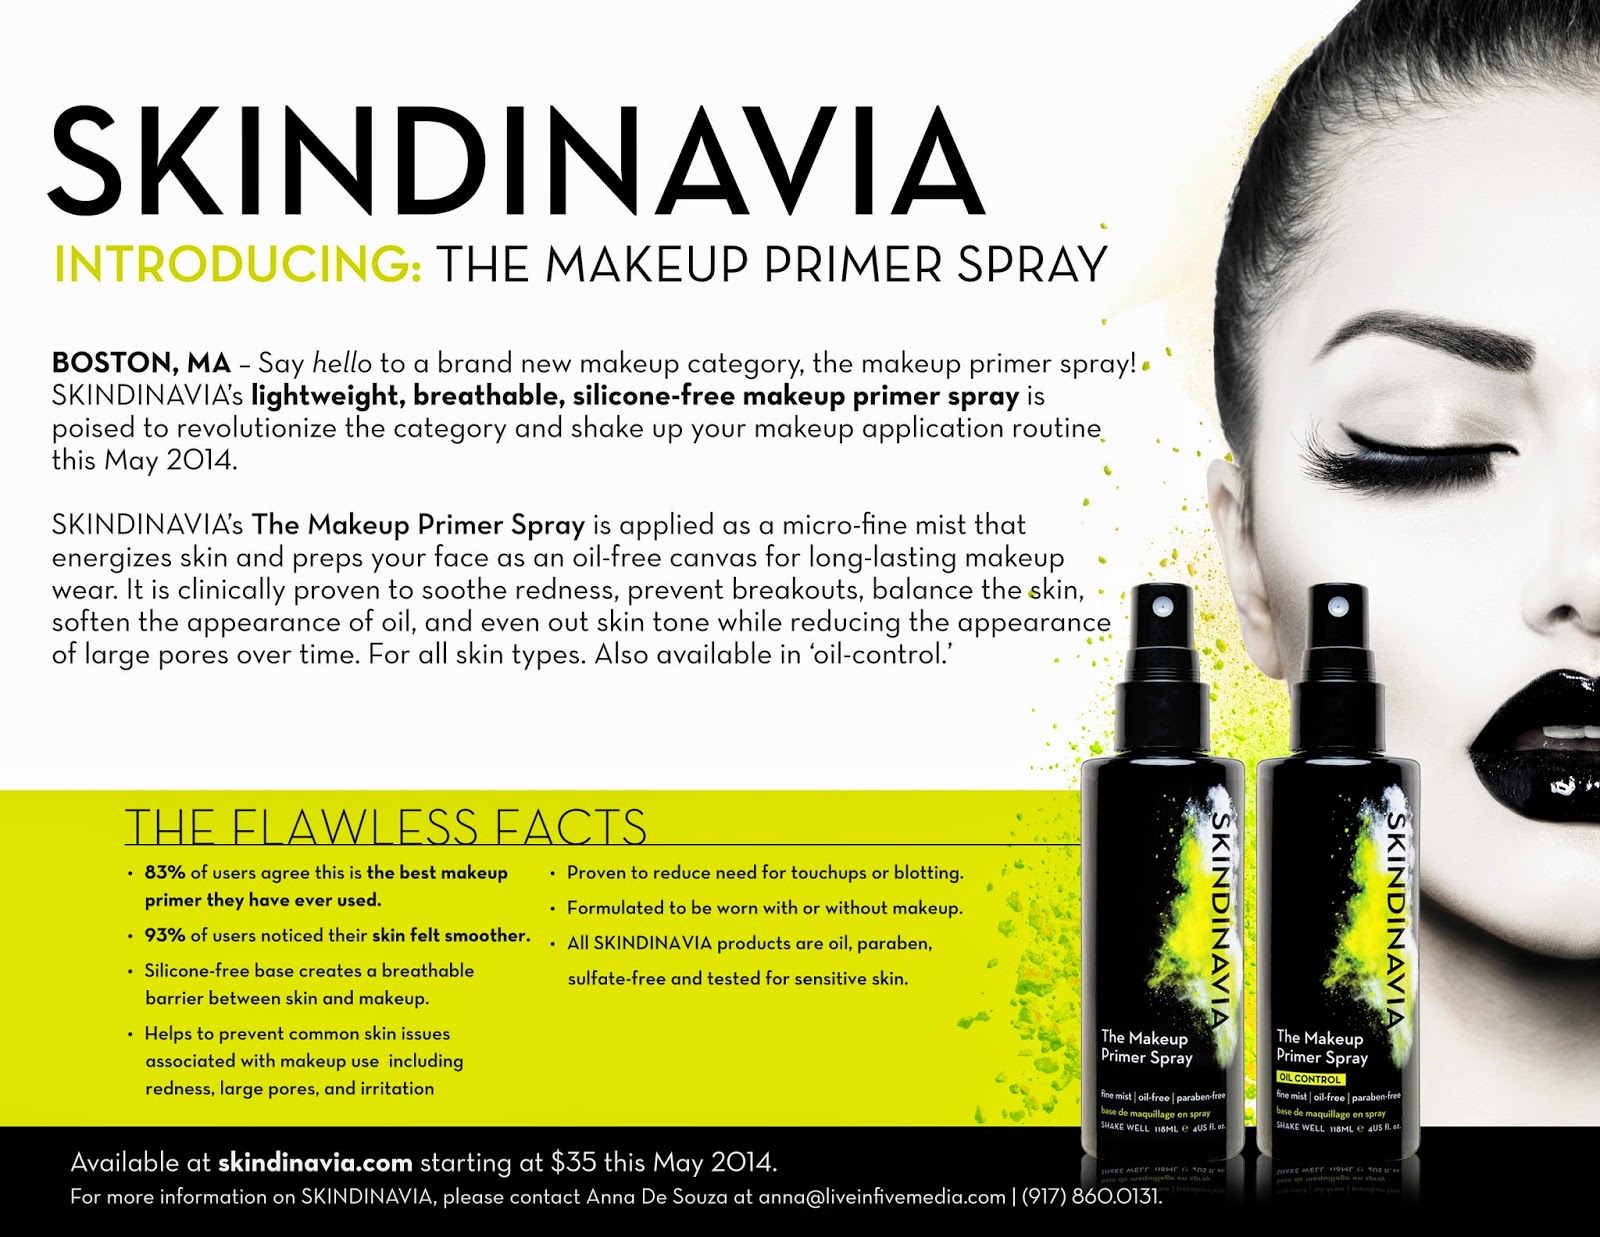 SKINDINAVIA’s The Makeup Primer Spray and The Makeup Primer Spray Oil-Control Review and Giveaway Ends May 30th via ProductReviewMom.com